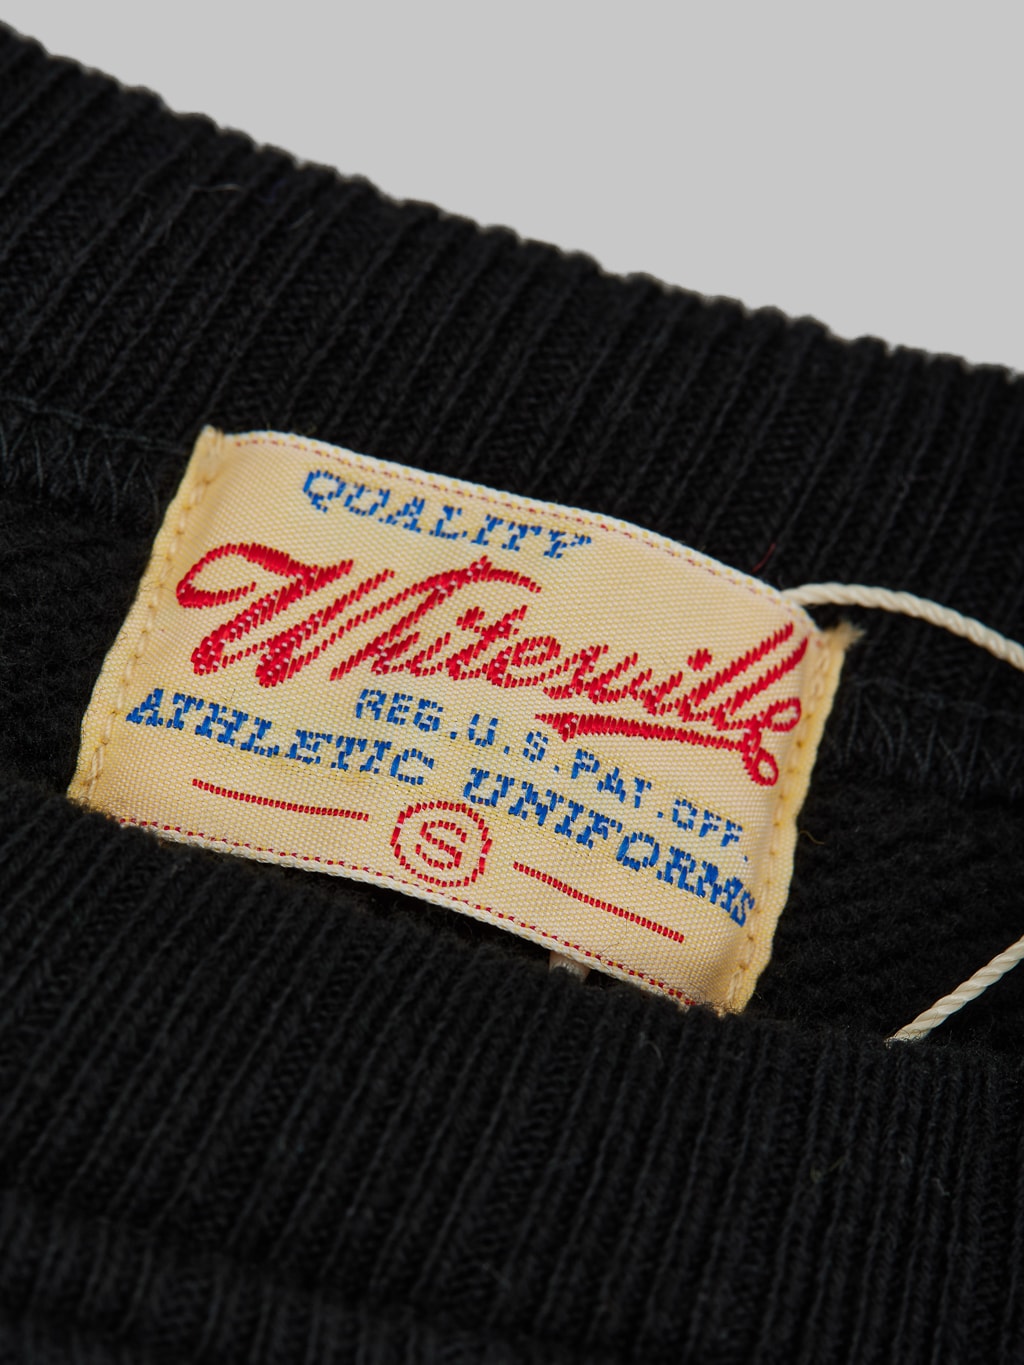 Whitesville cotton Loopwheel Sweatshirt Black interior label